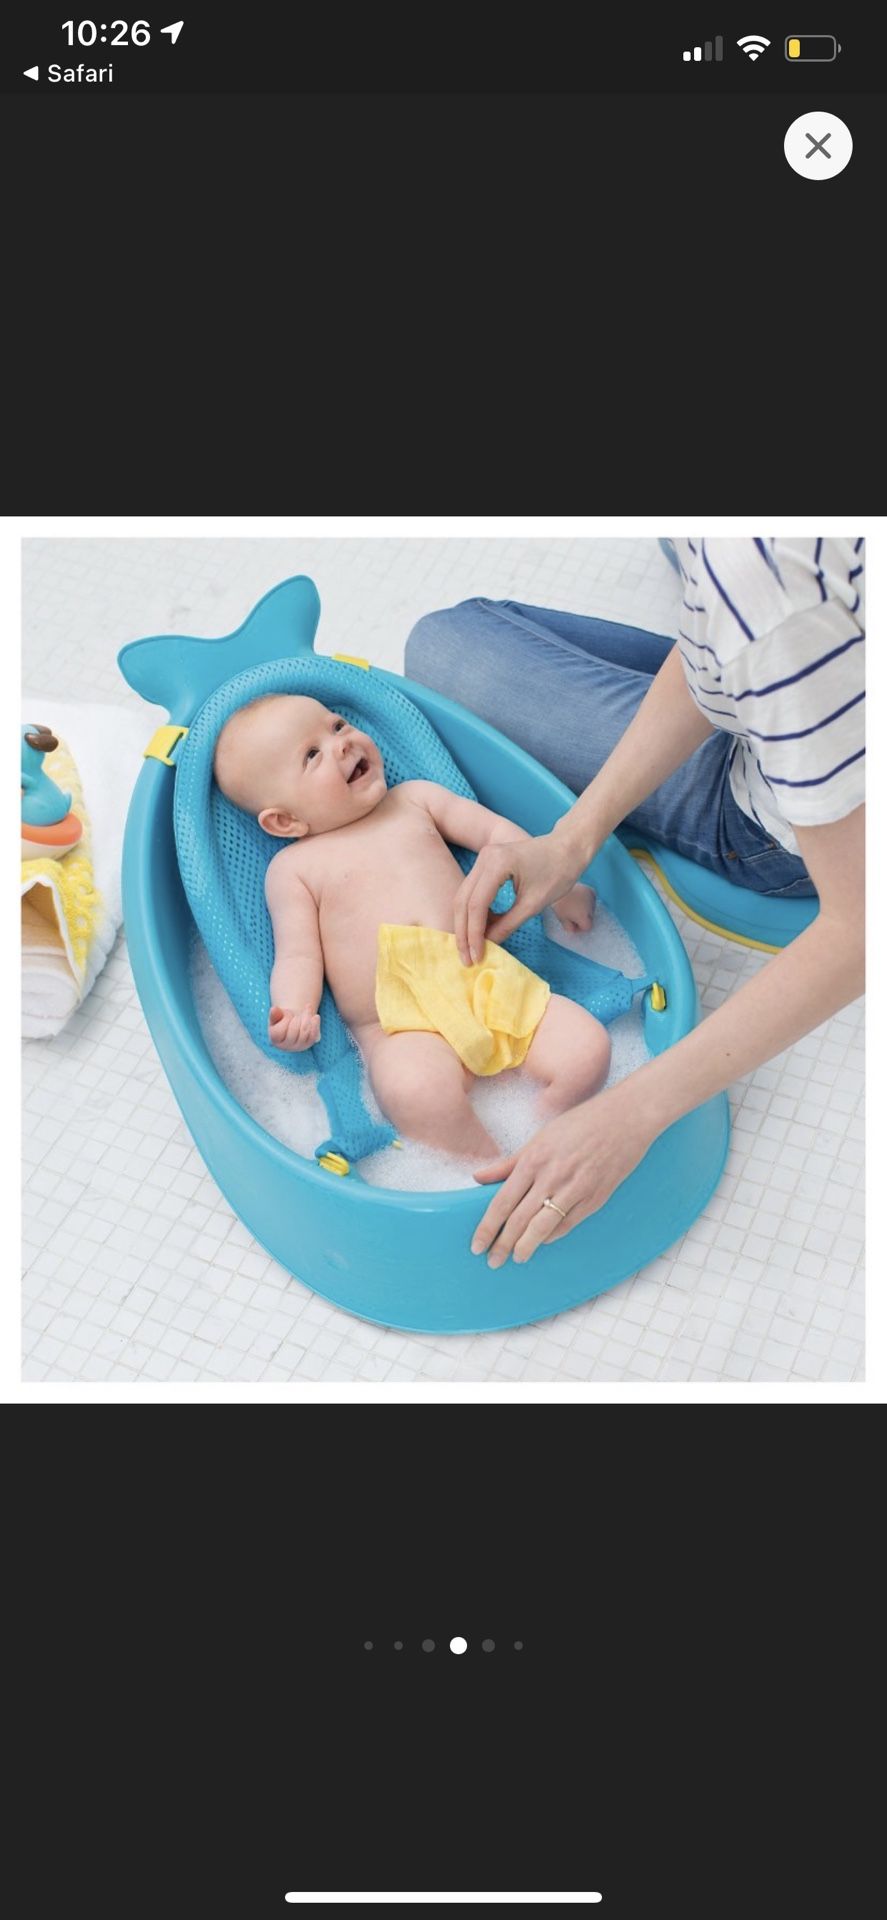 SKIP HOP Moby Smart Sling 3-Stage Tub in Grey- Baby Kids’ Infant Bathtub Bath 